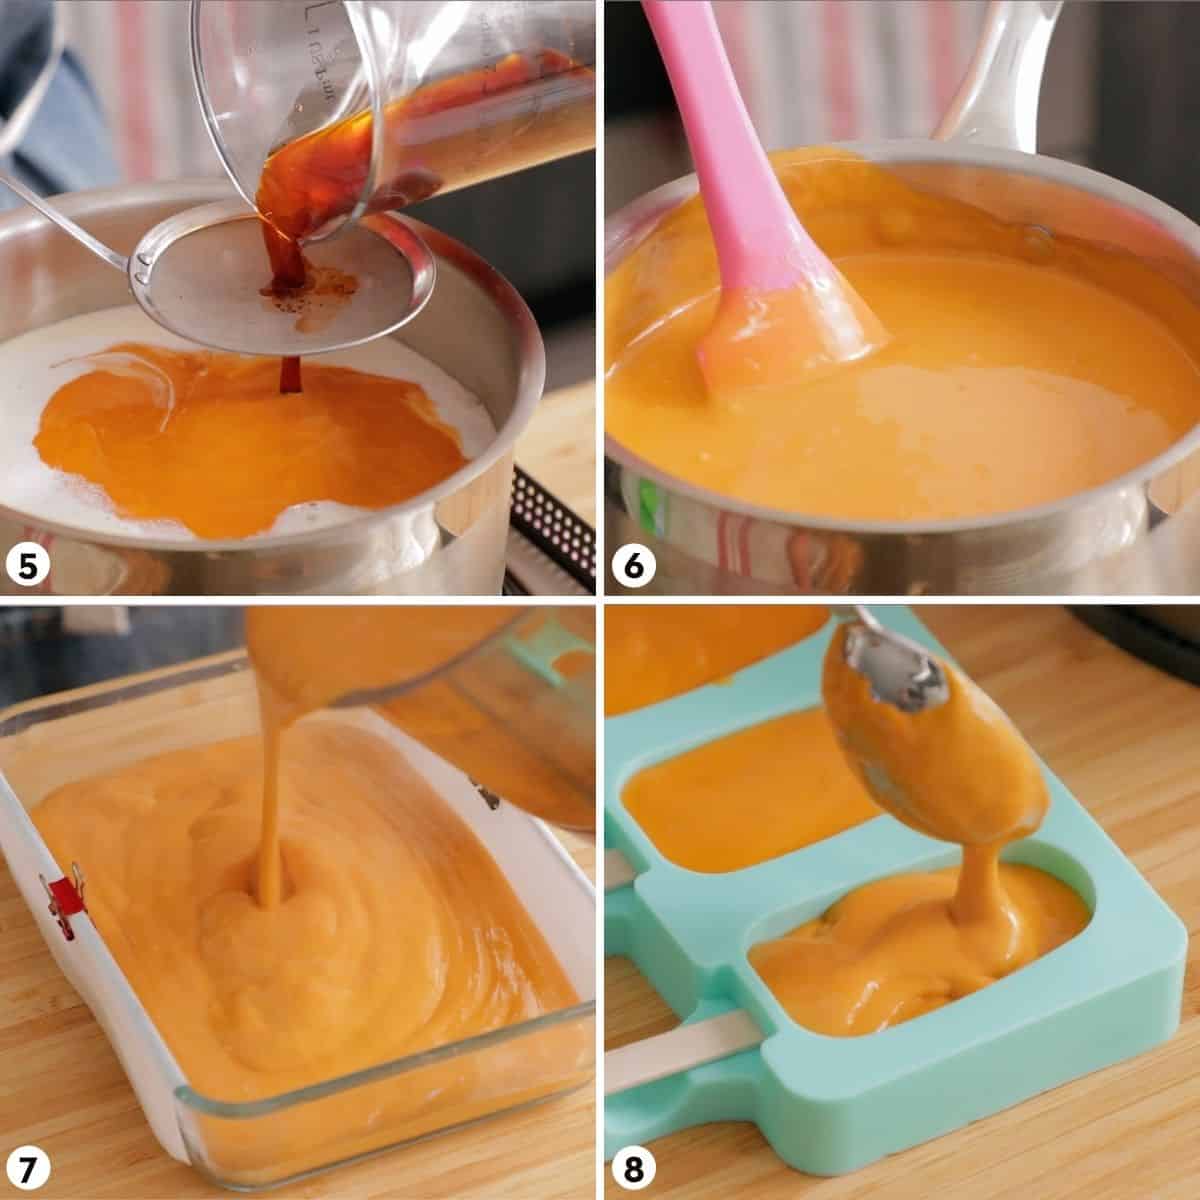 Process for making thai tea ice cream bars steps 5-8